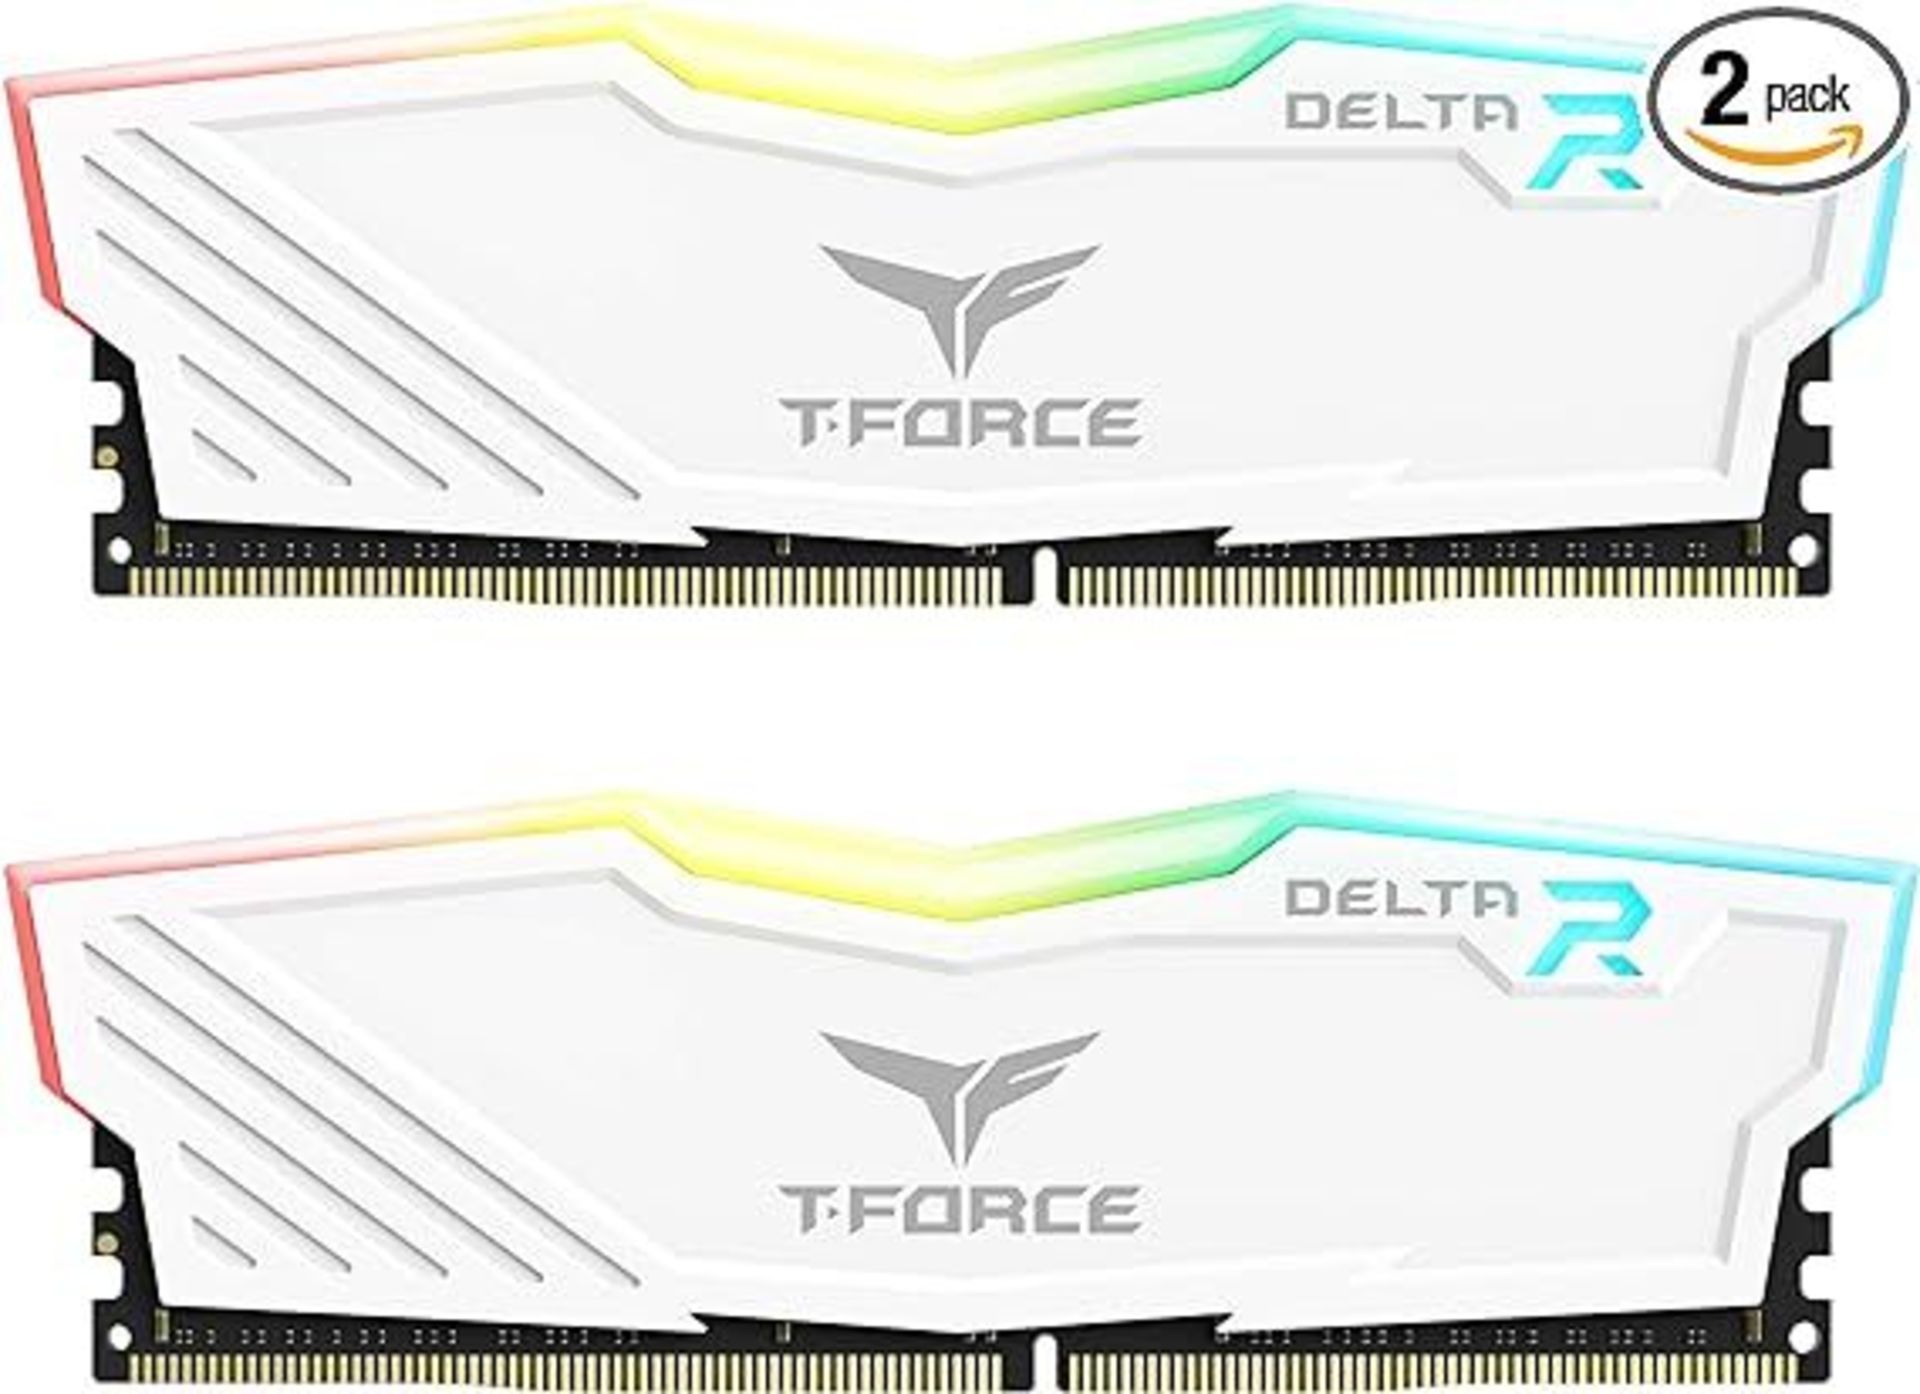 TEAMGROUP T-Force Delta RGB DDR4 16GB (2x8GB) 3200MHz (PC4-25600) CL16 Desktop Memory Module ram